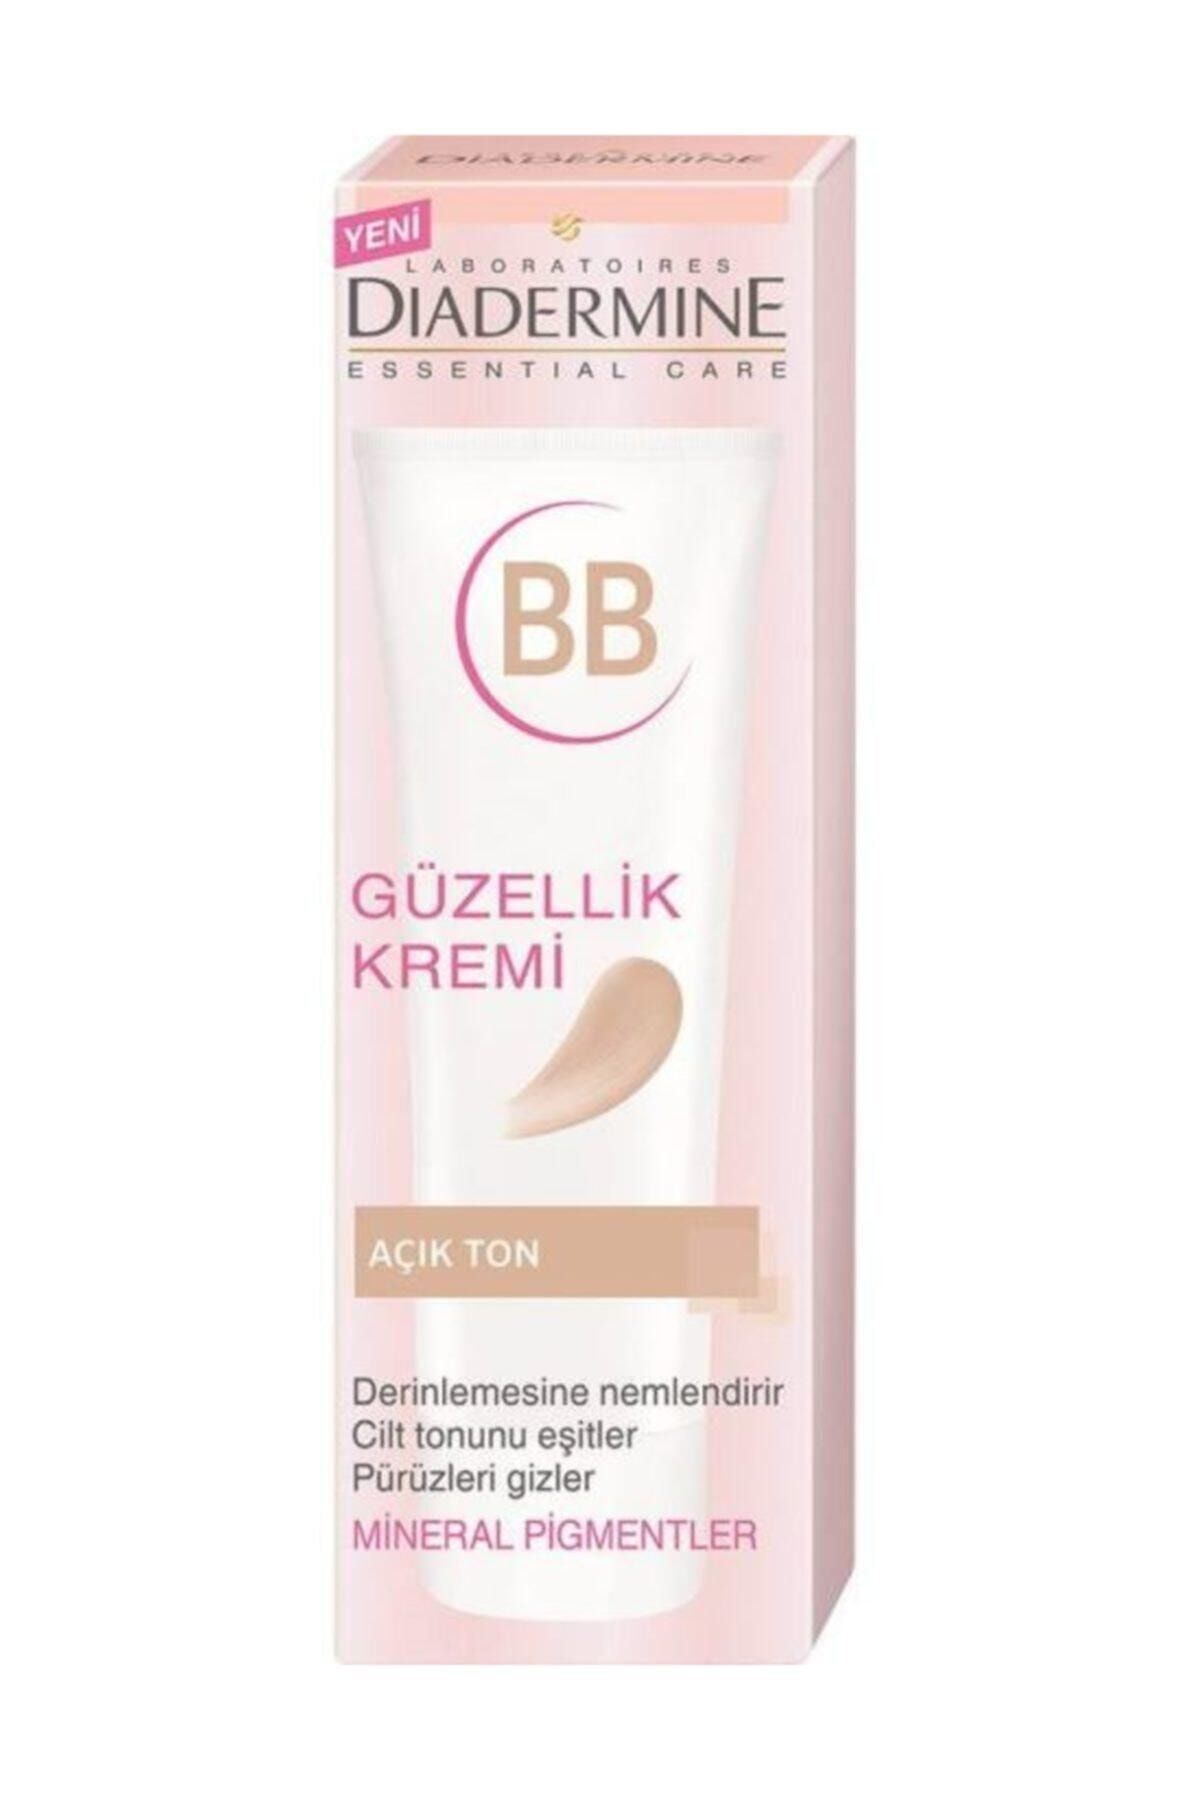 Diadermine Bb Krem - Essentials Açık Ton 50 ml